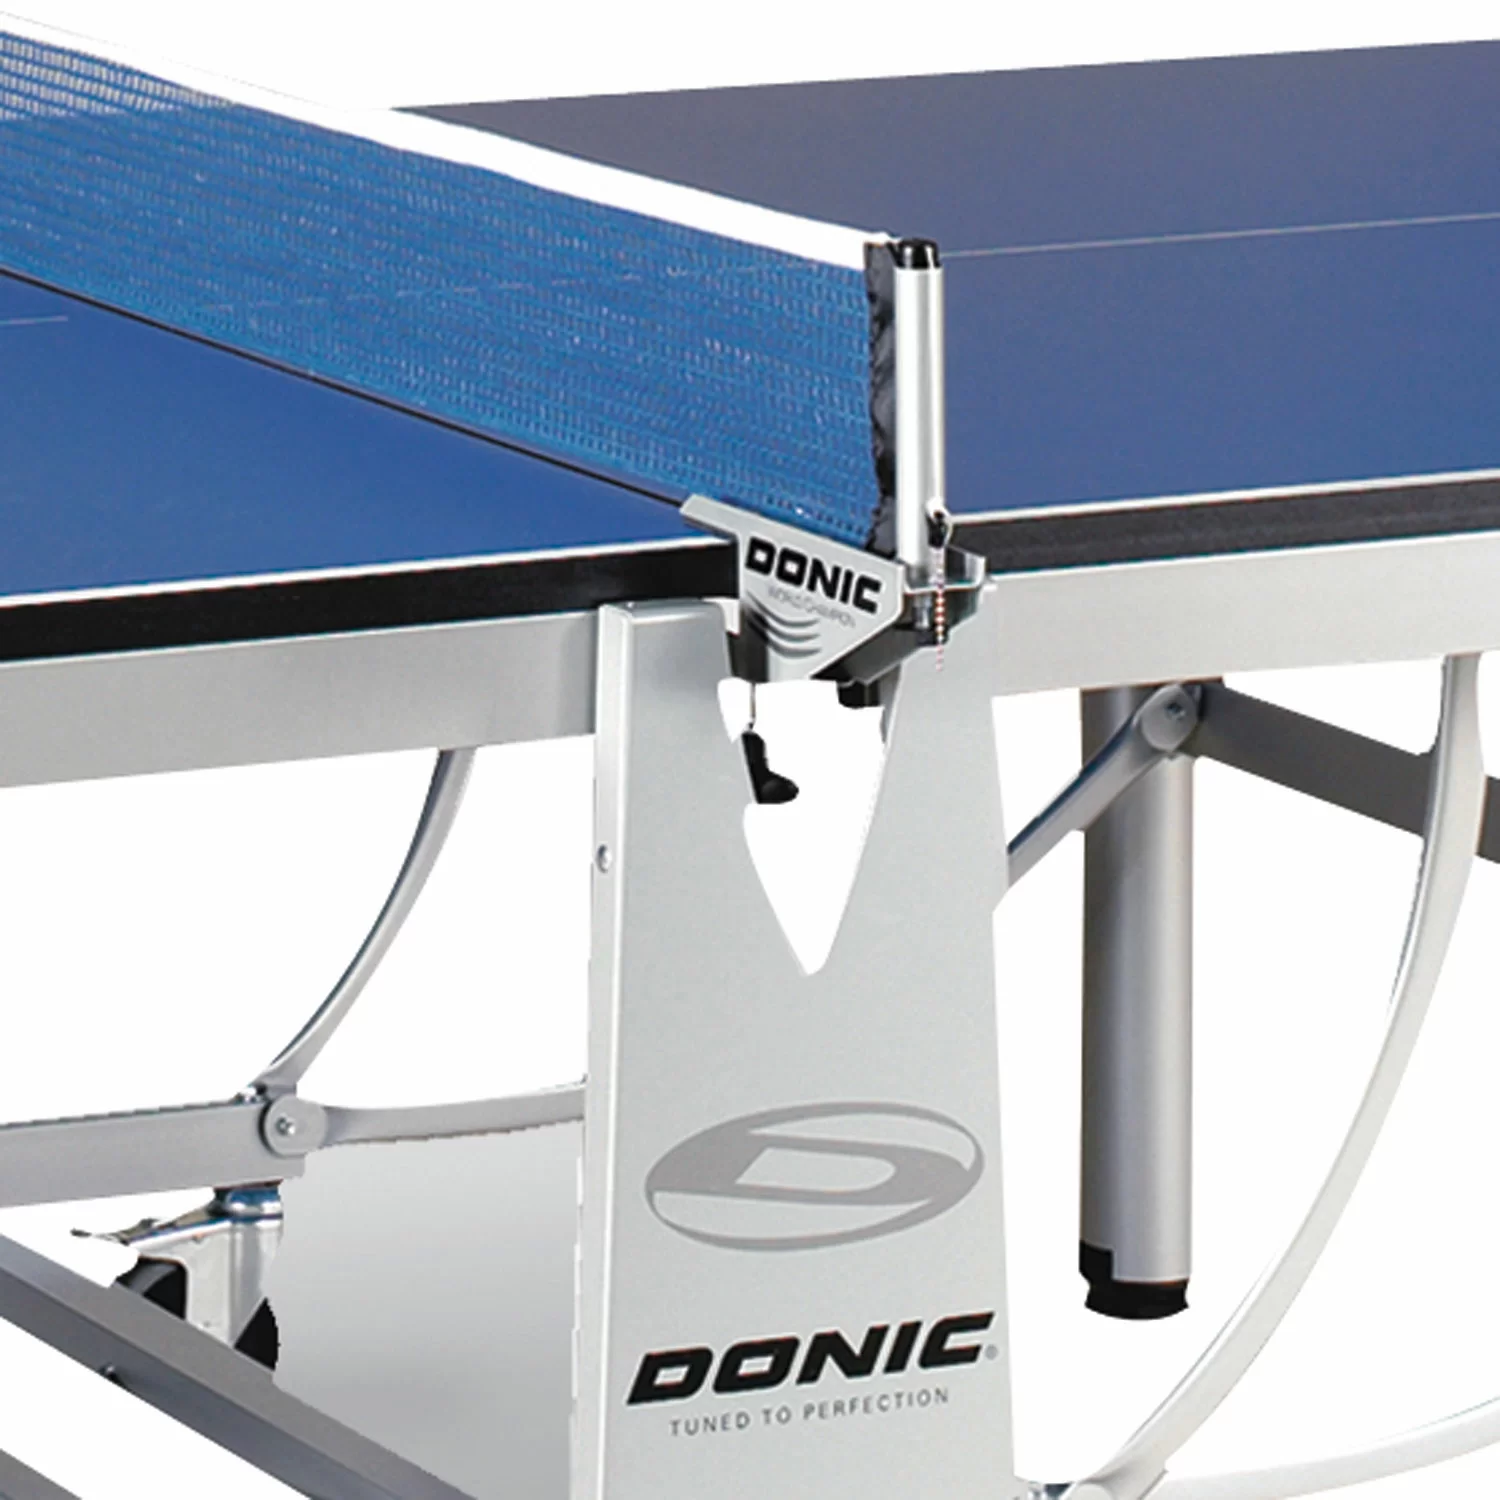 Реальное фото Теннисный стол DONIC WORLD CHAMPION TC BLUE (без сетки) 400240-B от магазина СпортЕВ